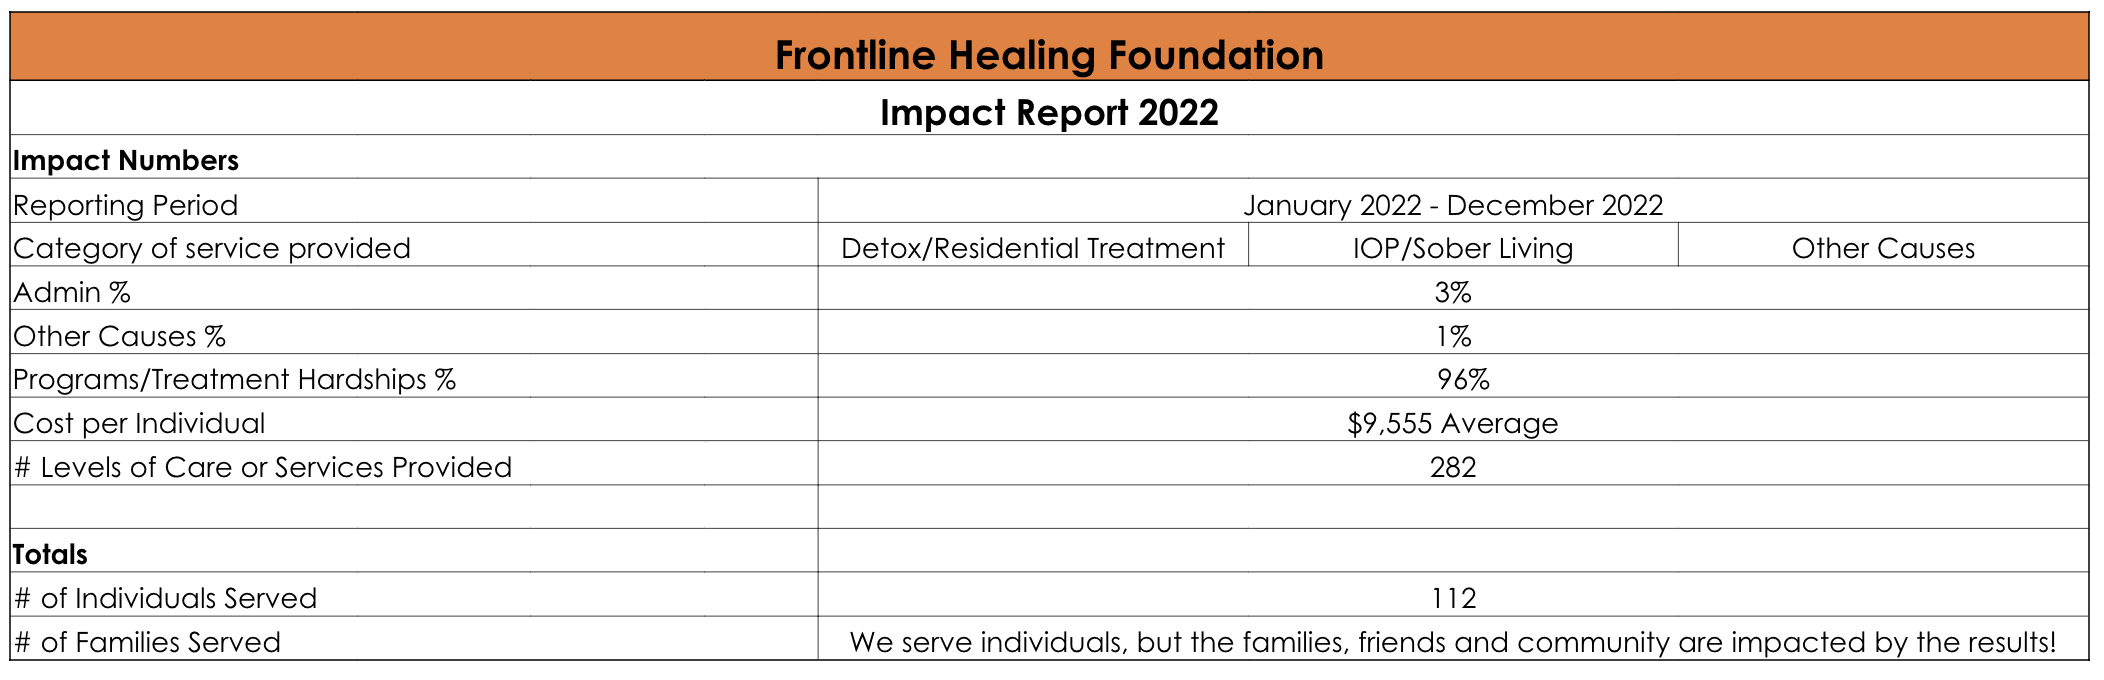 Frontline Healing Foundation Impact Report 2022